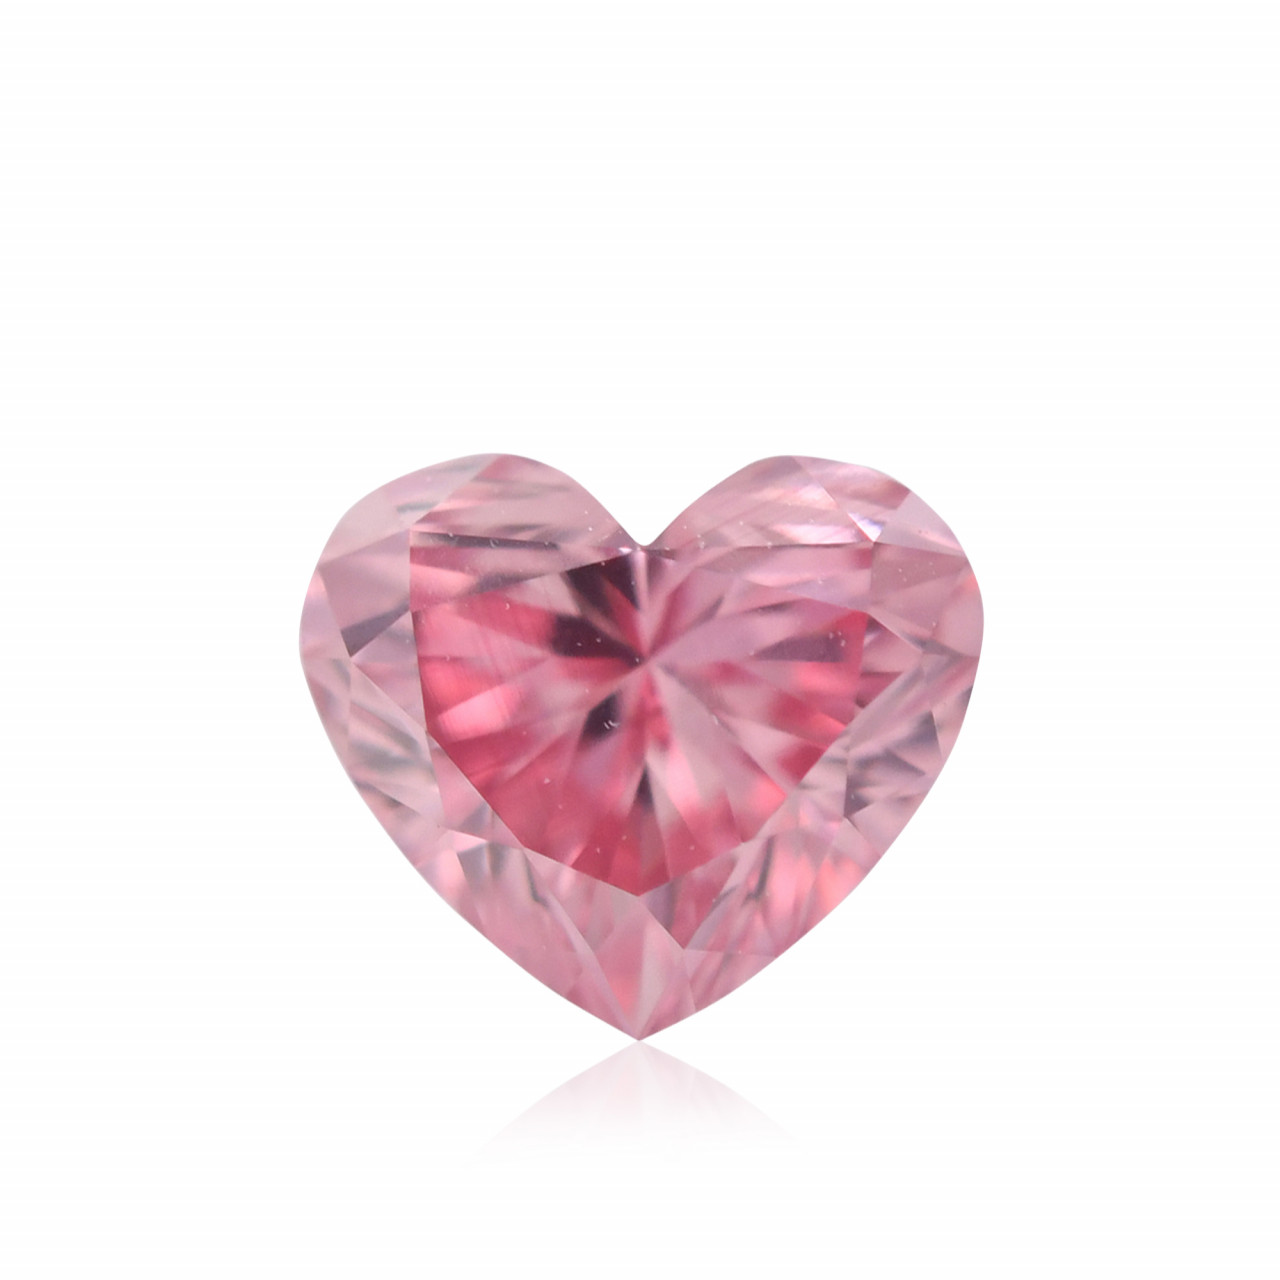 0.24 carat, Fancy Intense Pink Diamond, 4P, Heart Shape, VVS2 Clarity